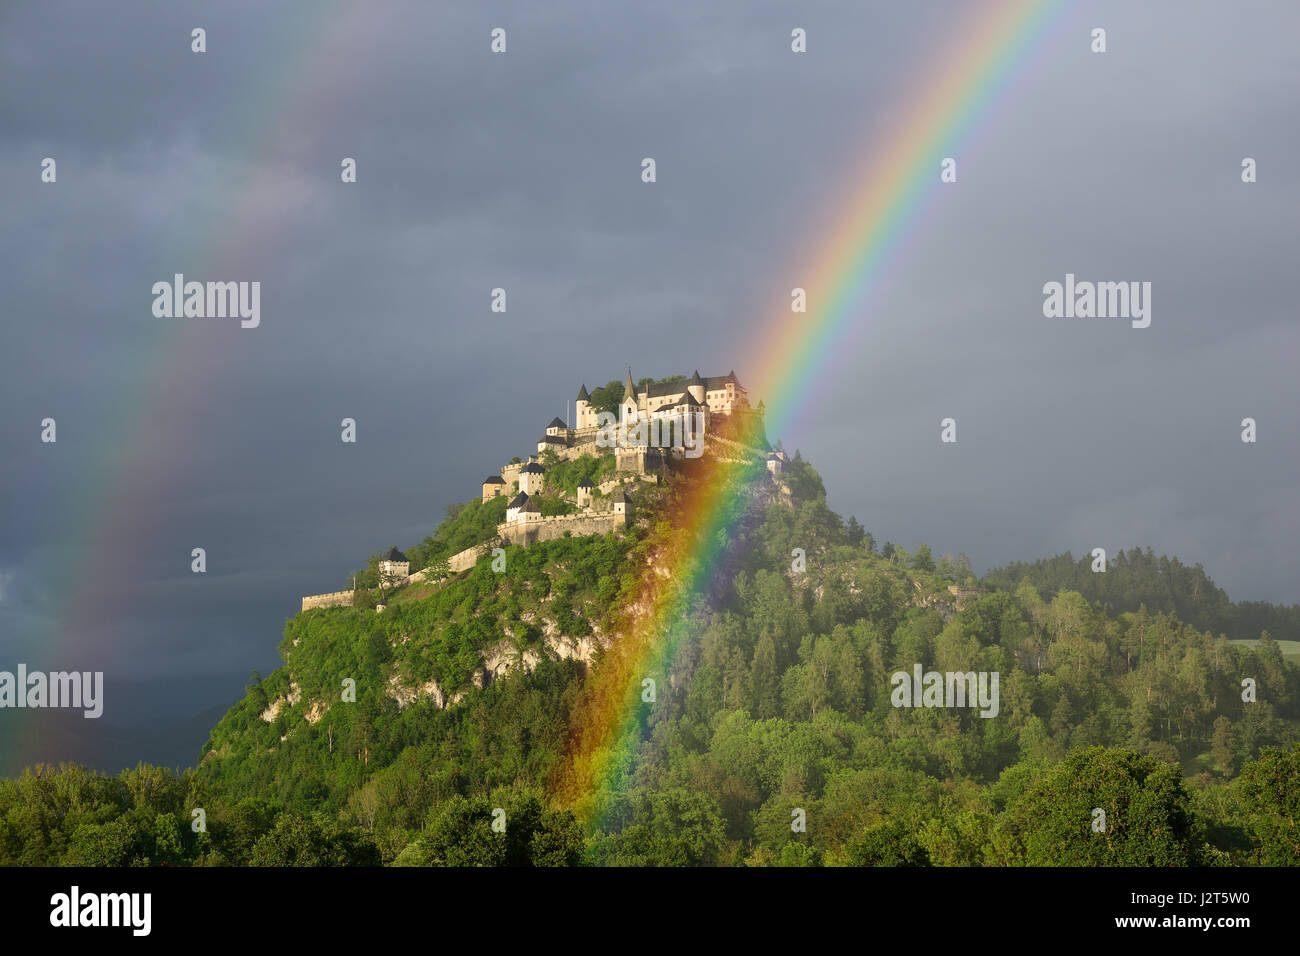 Double rainbow over the medieval hilltop castle of Hochosterwitz. Launsdorf, Carinthia, Austria. Stock Photo